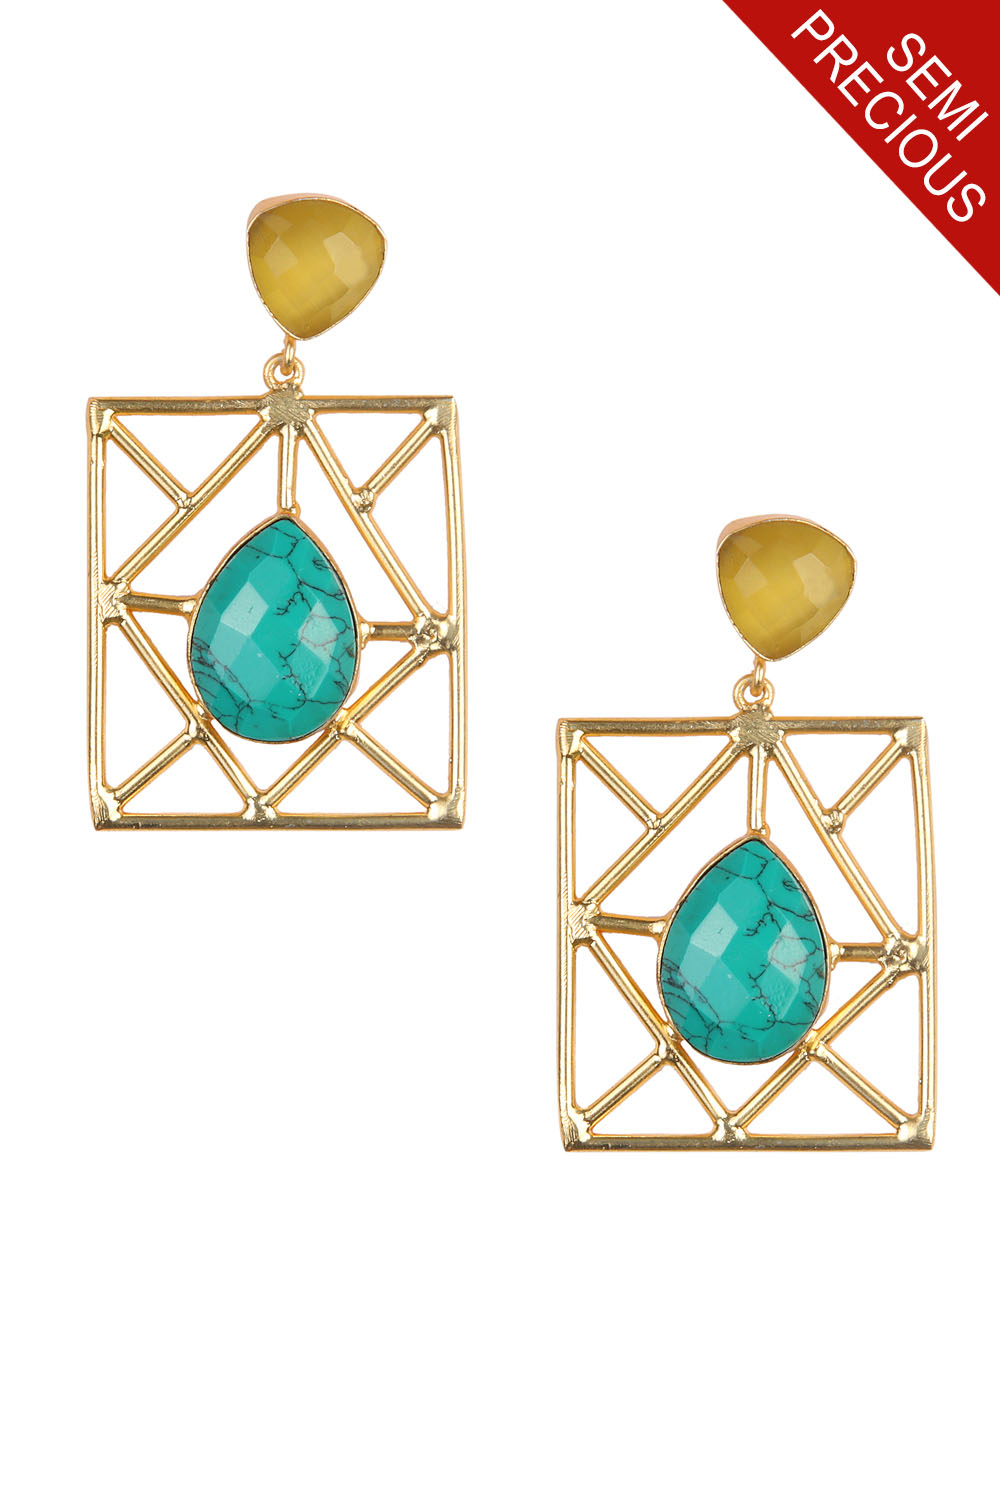 Silver Brass Gold Plated Statement Earring Dangle Stud Earring Boho  Handmade Stud Push Back Earring at Rs 288/pair | गोल्ड प्लेटेड इयररिंग in  Jaipur | ID: 20467159833